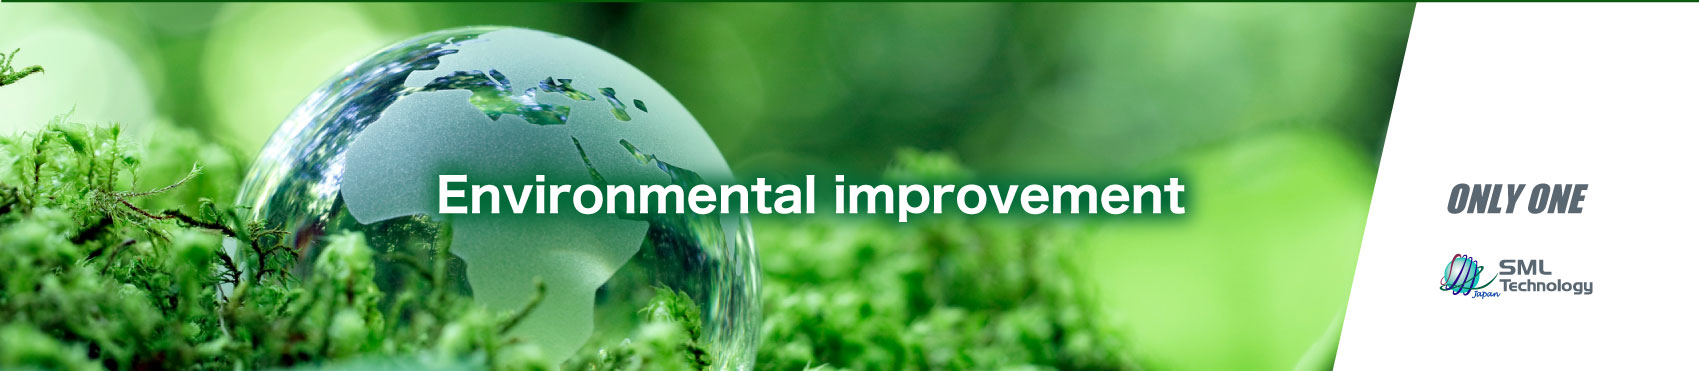 Environmental improvement